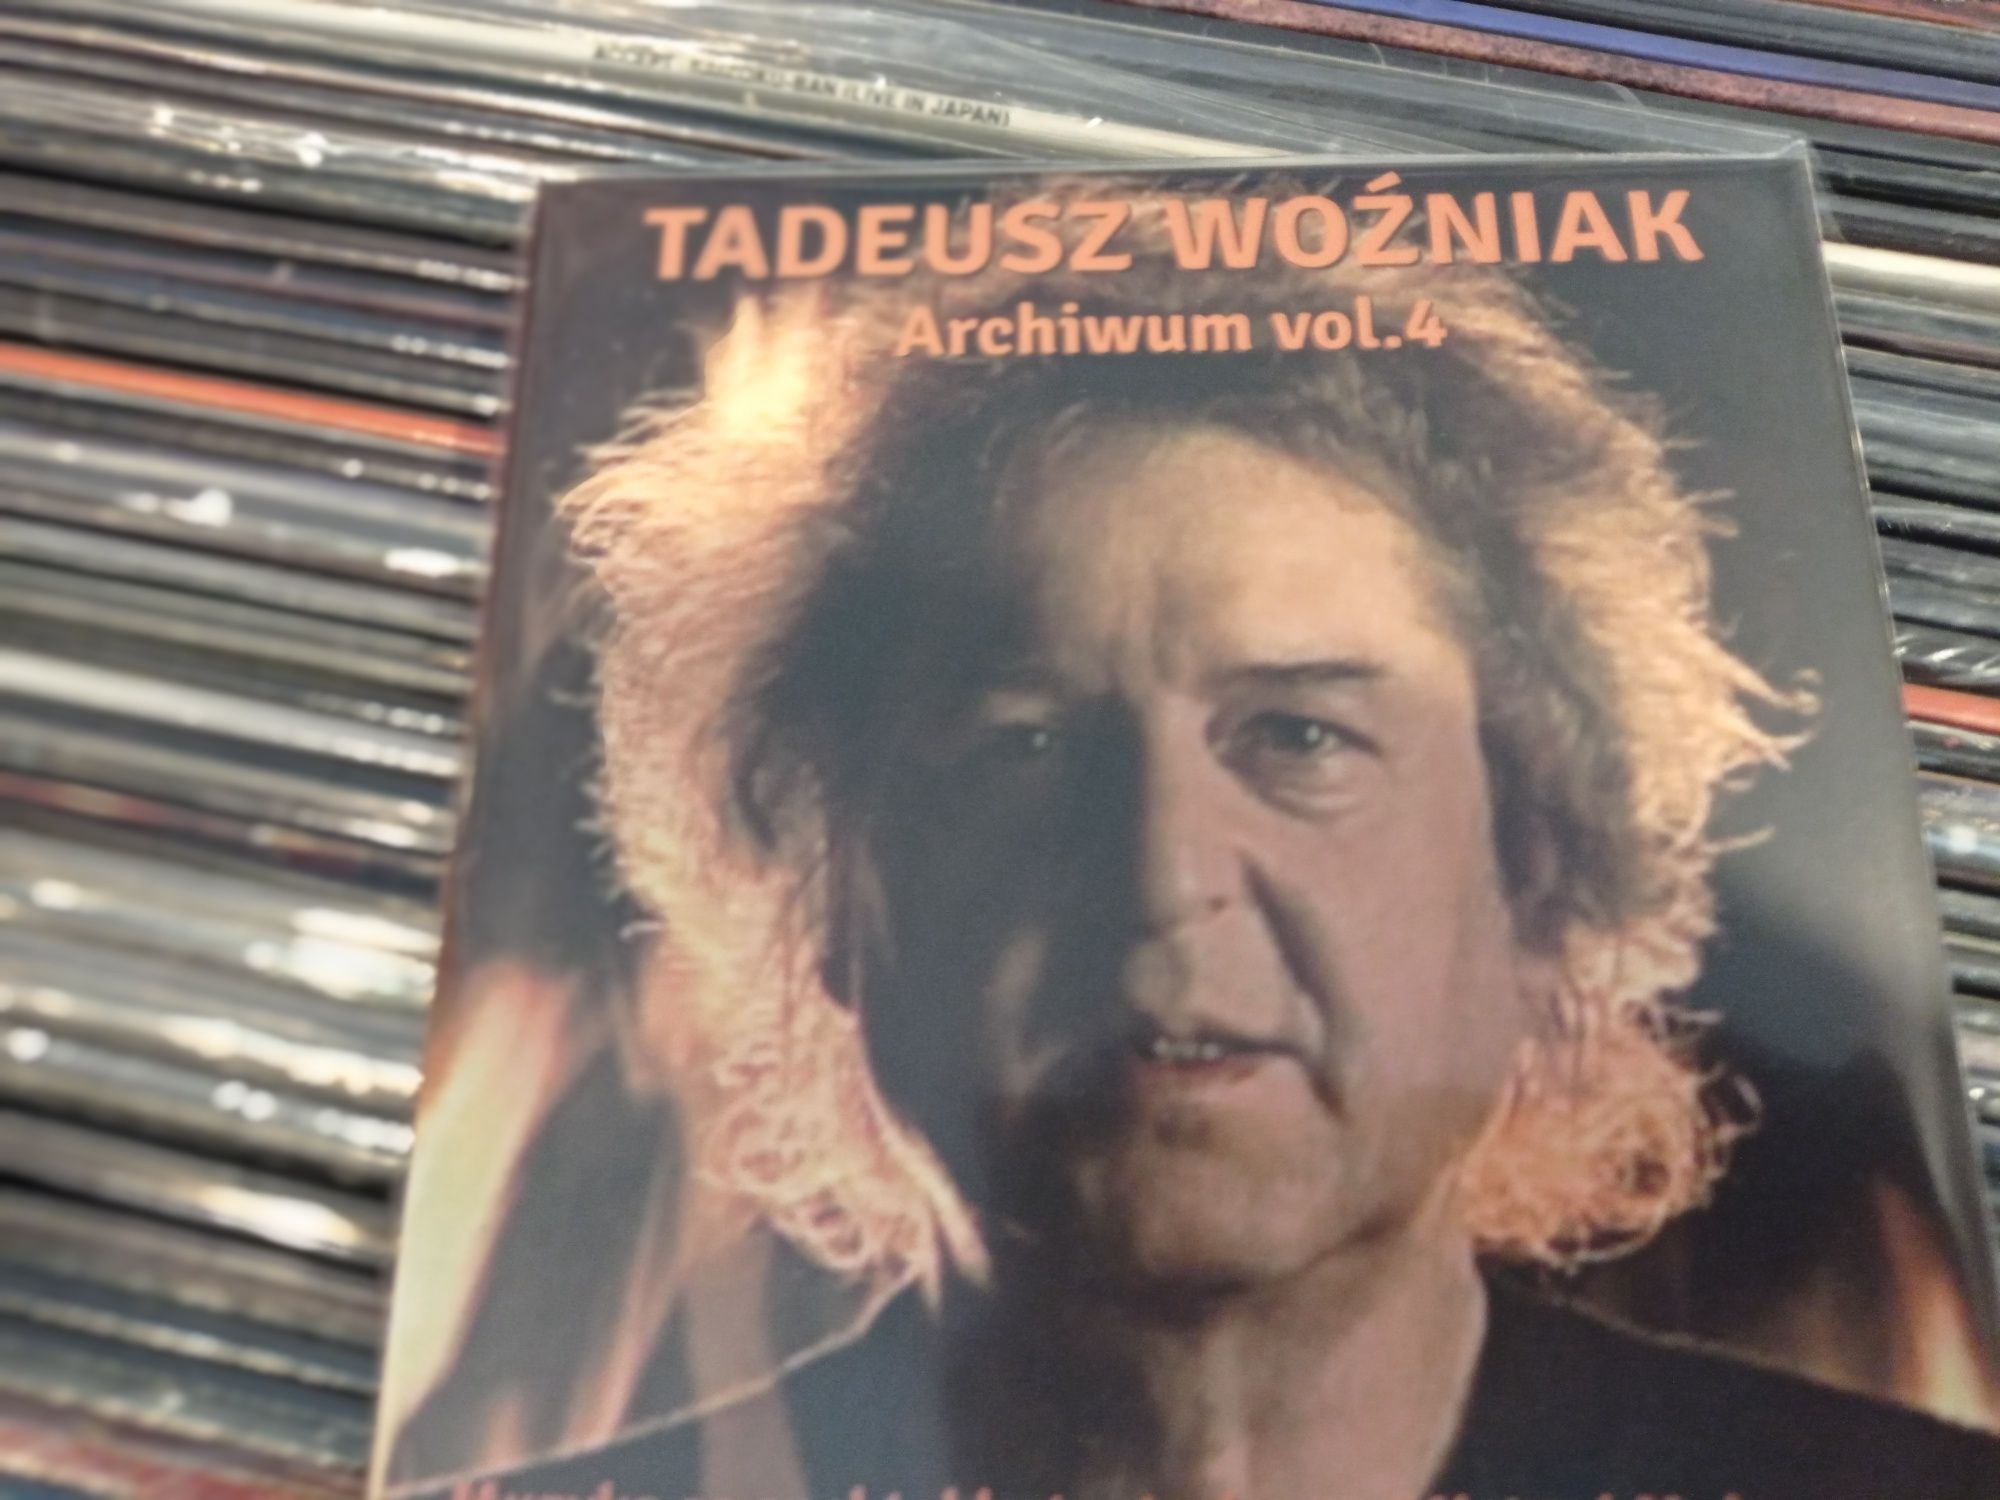 Tadeusz Woźniak - Archiwum vol 4